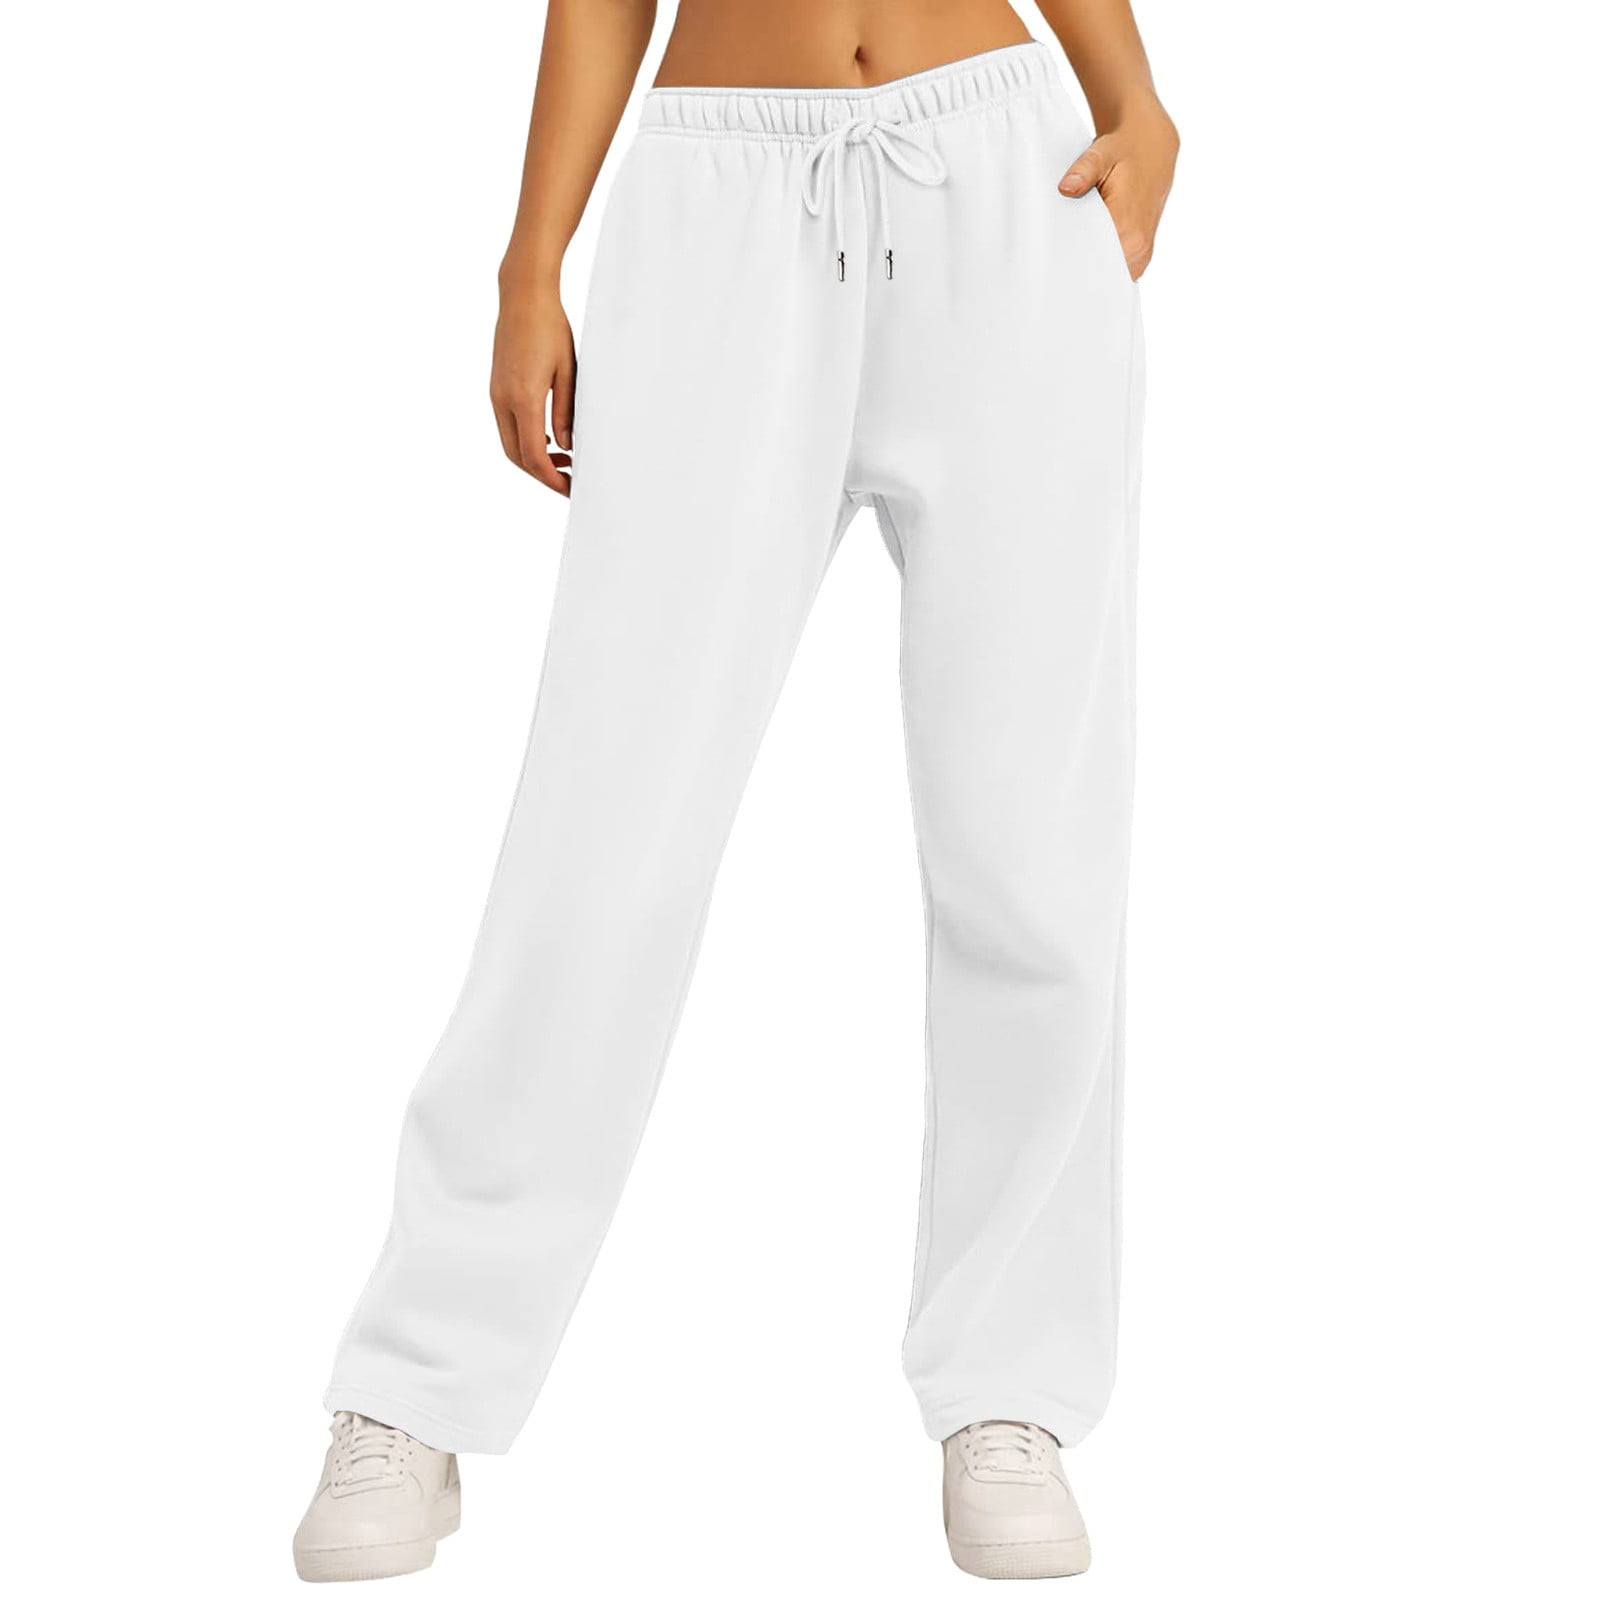  GIMMEDAT Volleyball Soft Joggers Drawstring Pocket Cuff Pants  Sweatpants Girls Women (White, Small) : Clothing, Shoes & Jewelry